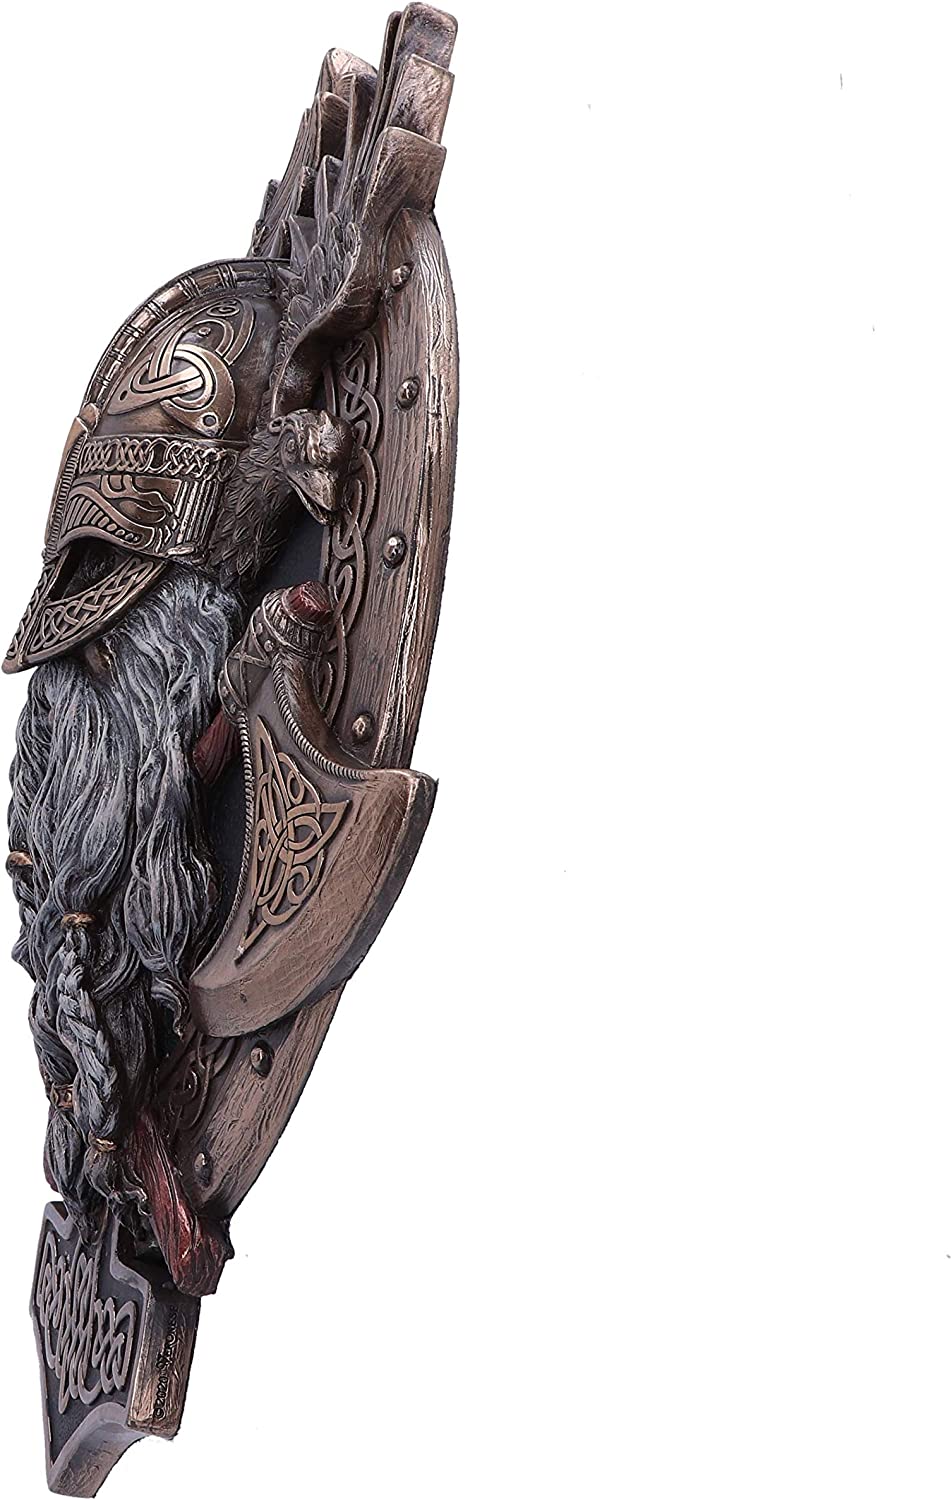 Nemesis Now Bronze for Valhalla Viking Axe Hammer Raven Wall Plaque, 27cm